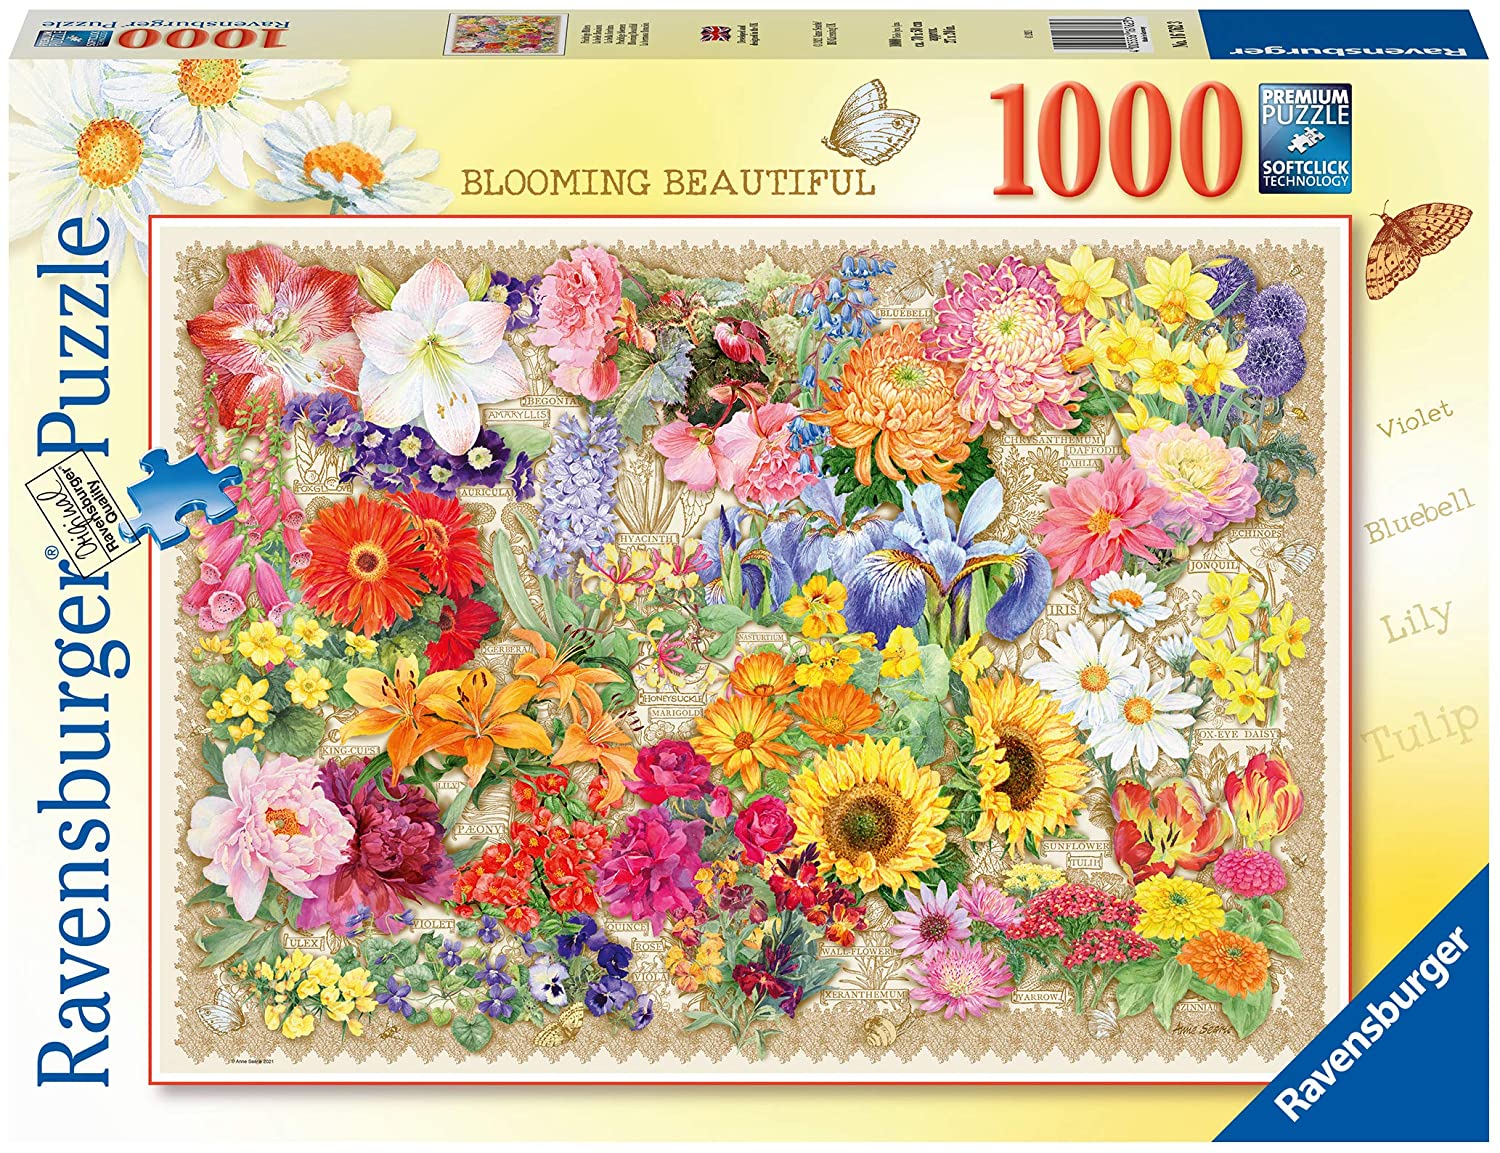 Ravensburger Blooming Beautiful 1000 Piece Jigsaw